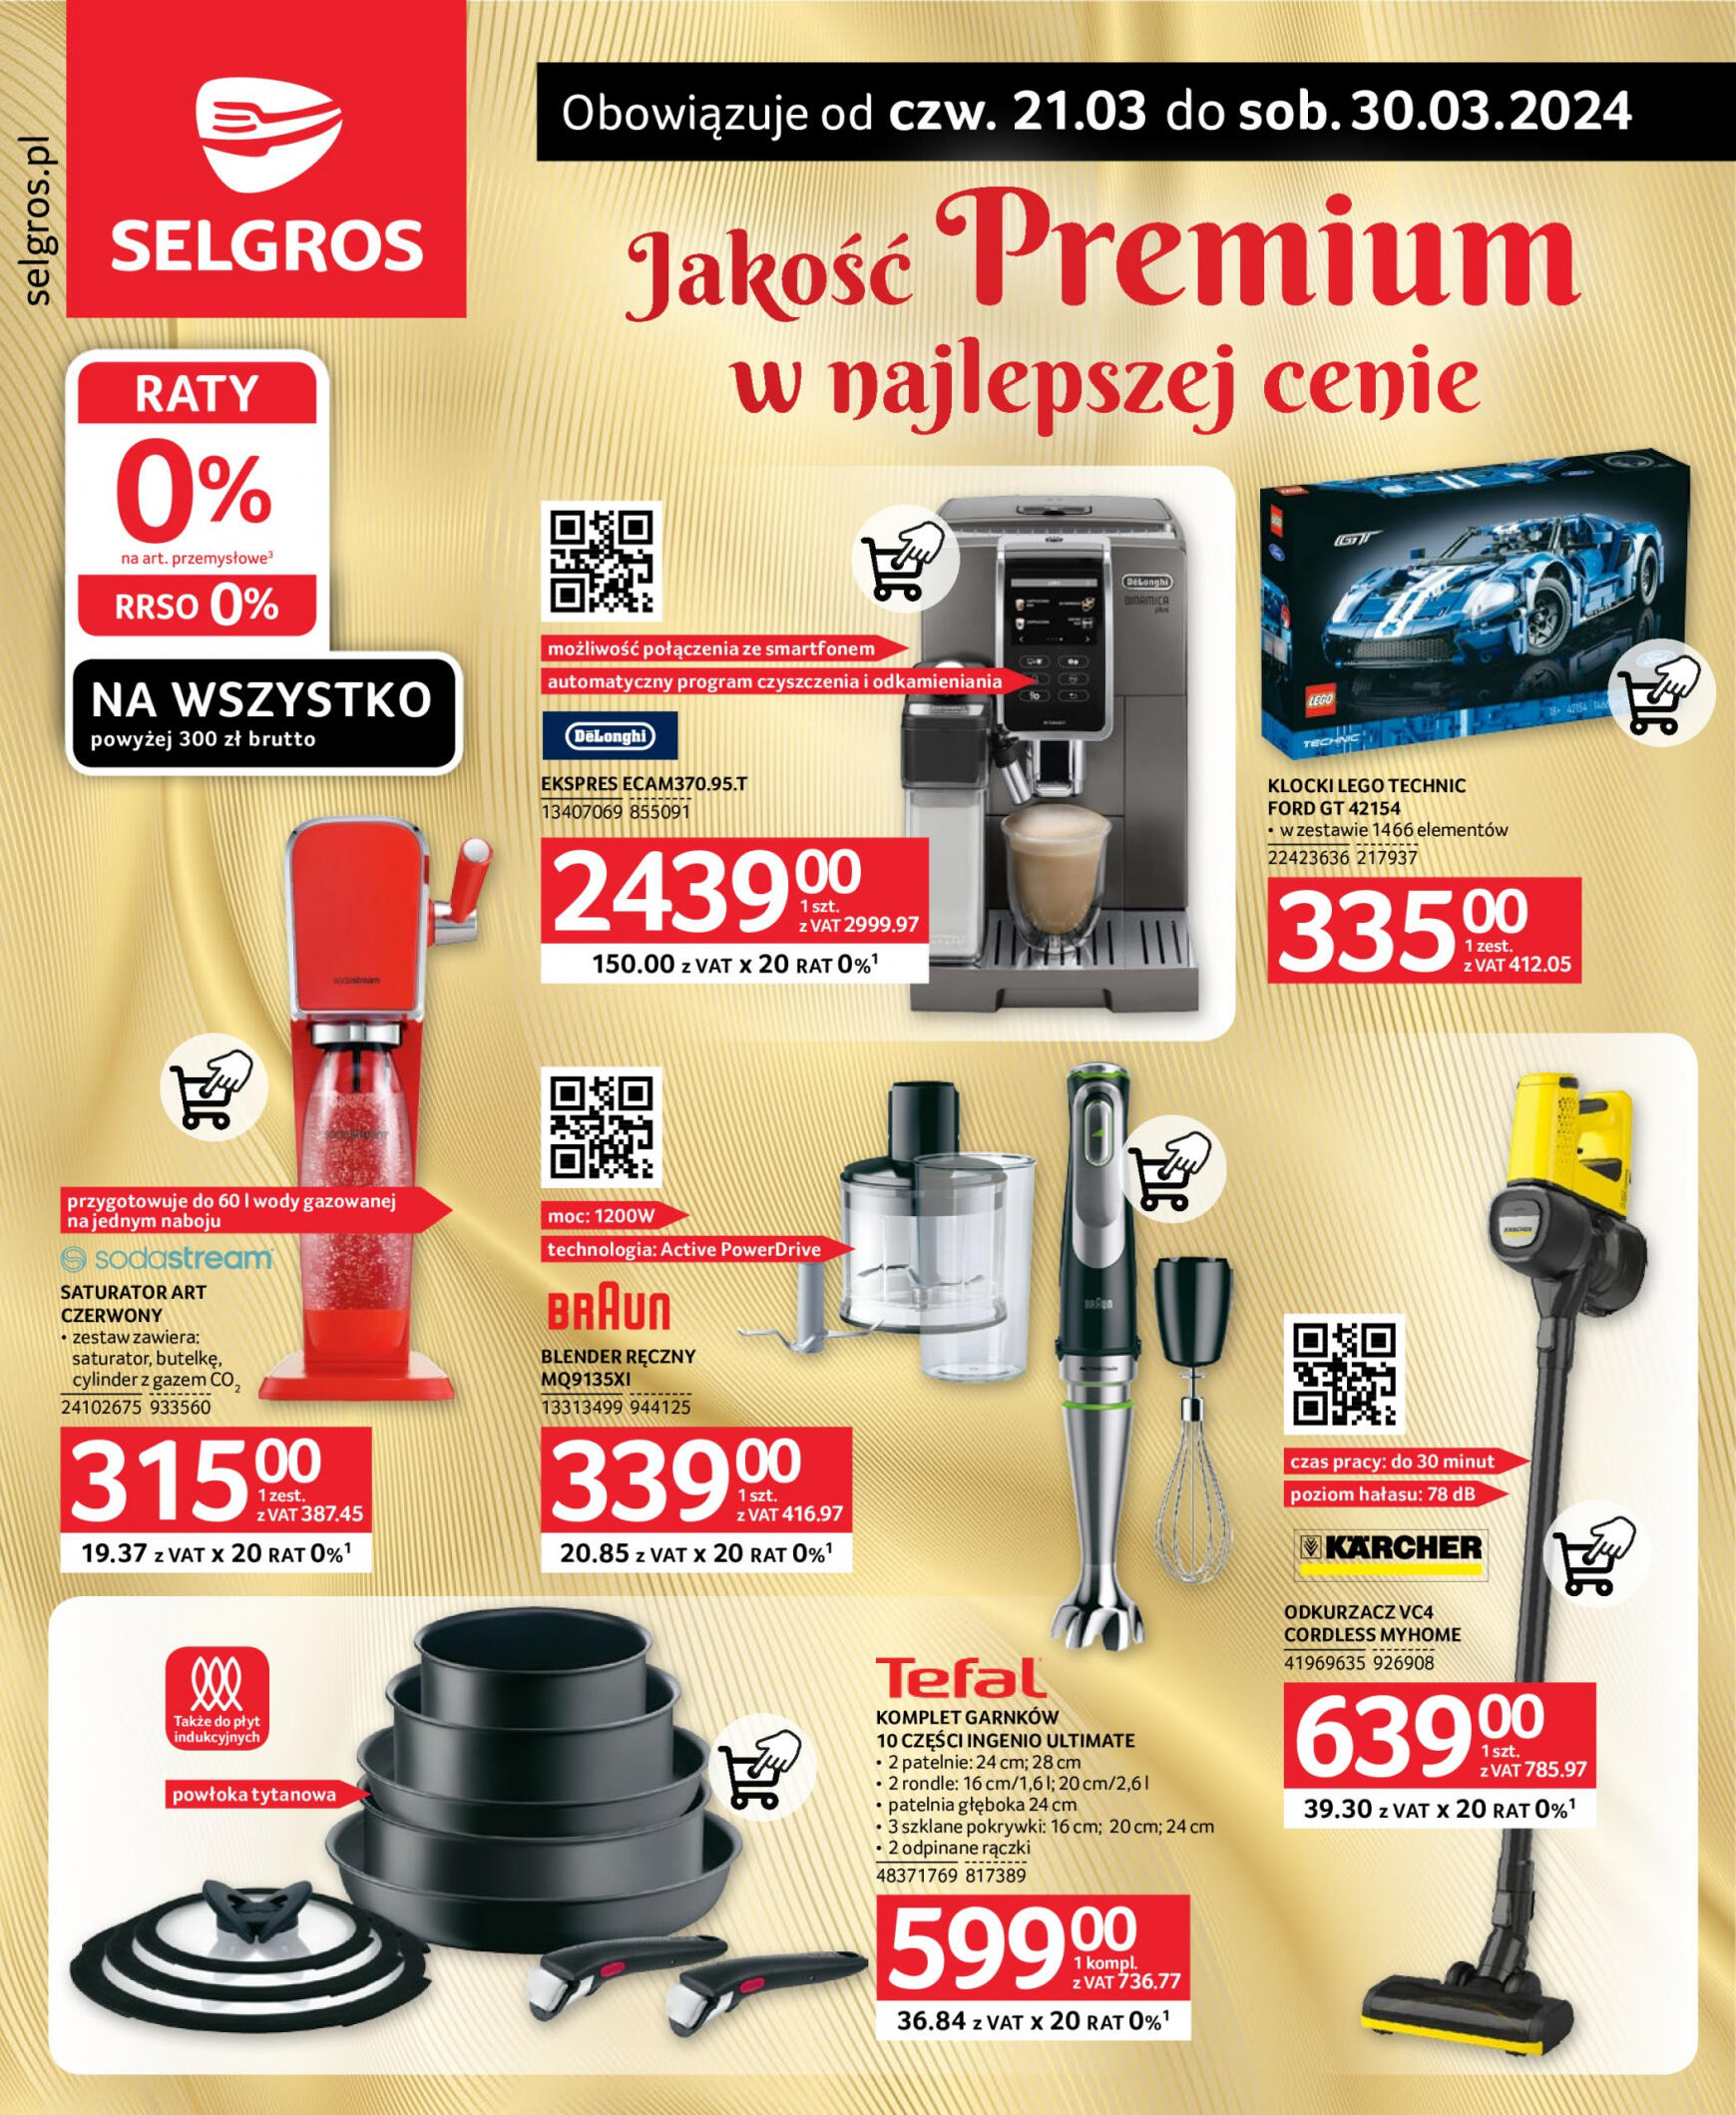 selgros - Selgros cash&carry - Premium obowiązuje od 21.03.2024 - page: 1